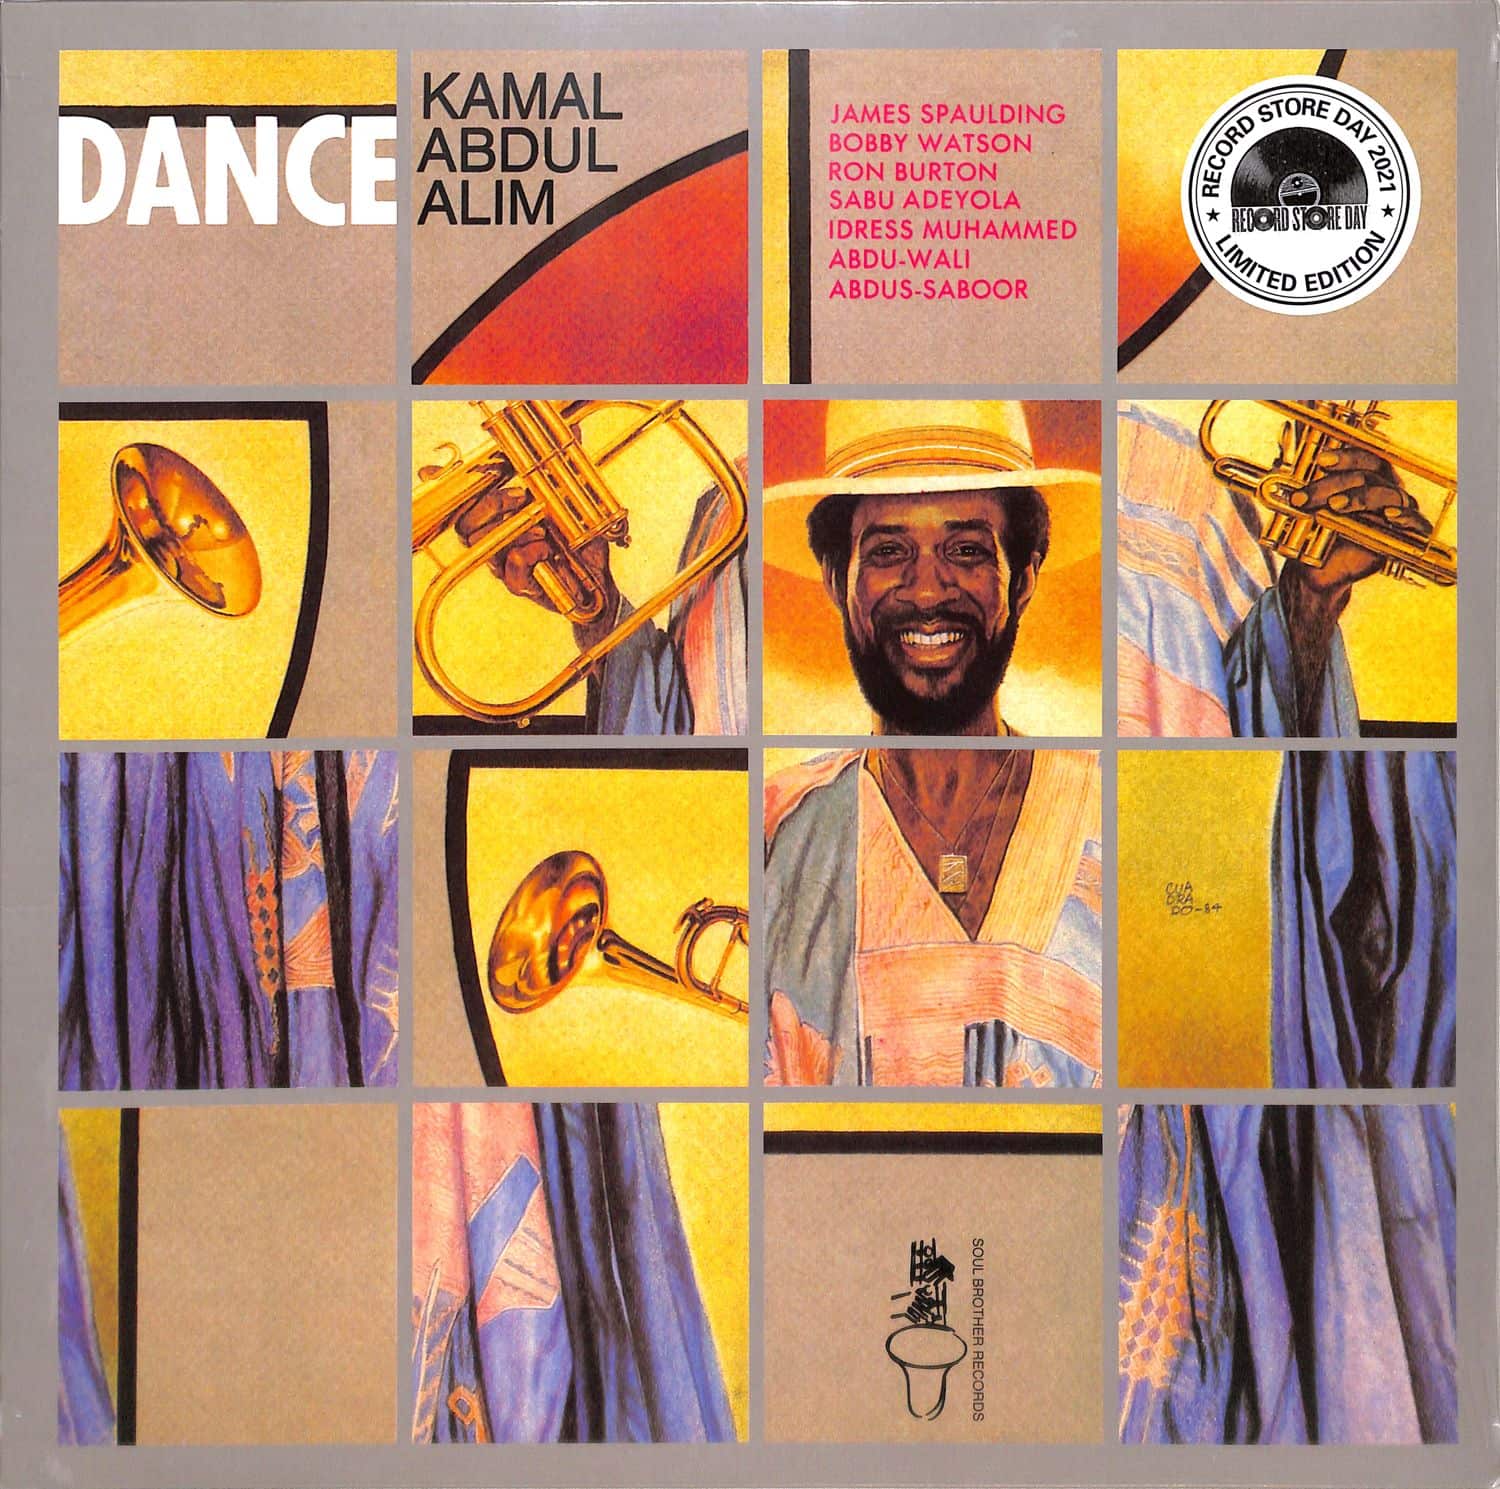 Kamal Abdul-Alim & The Brothers - DANCE 